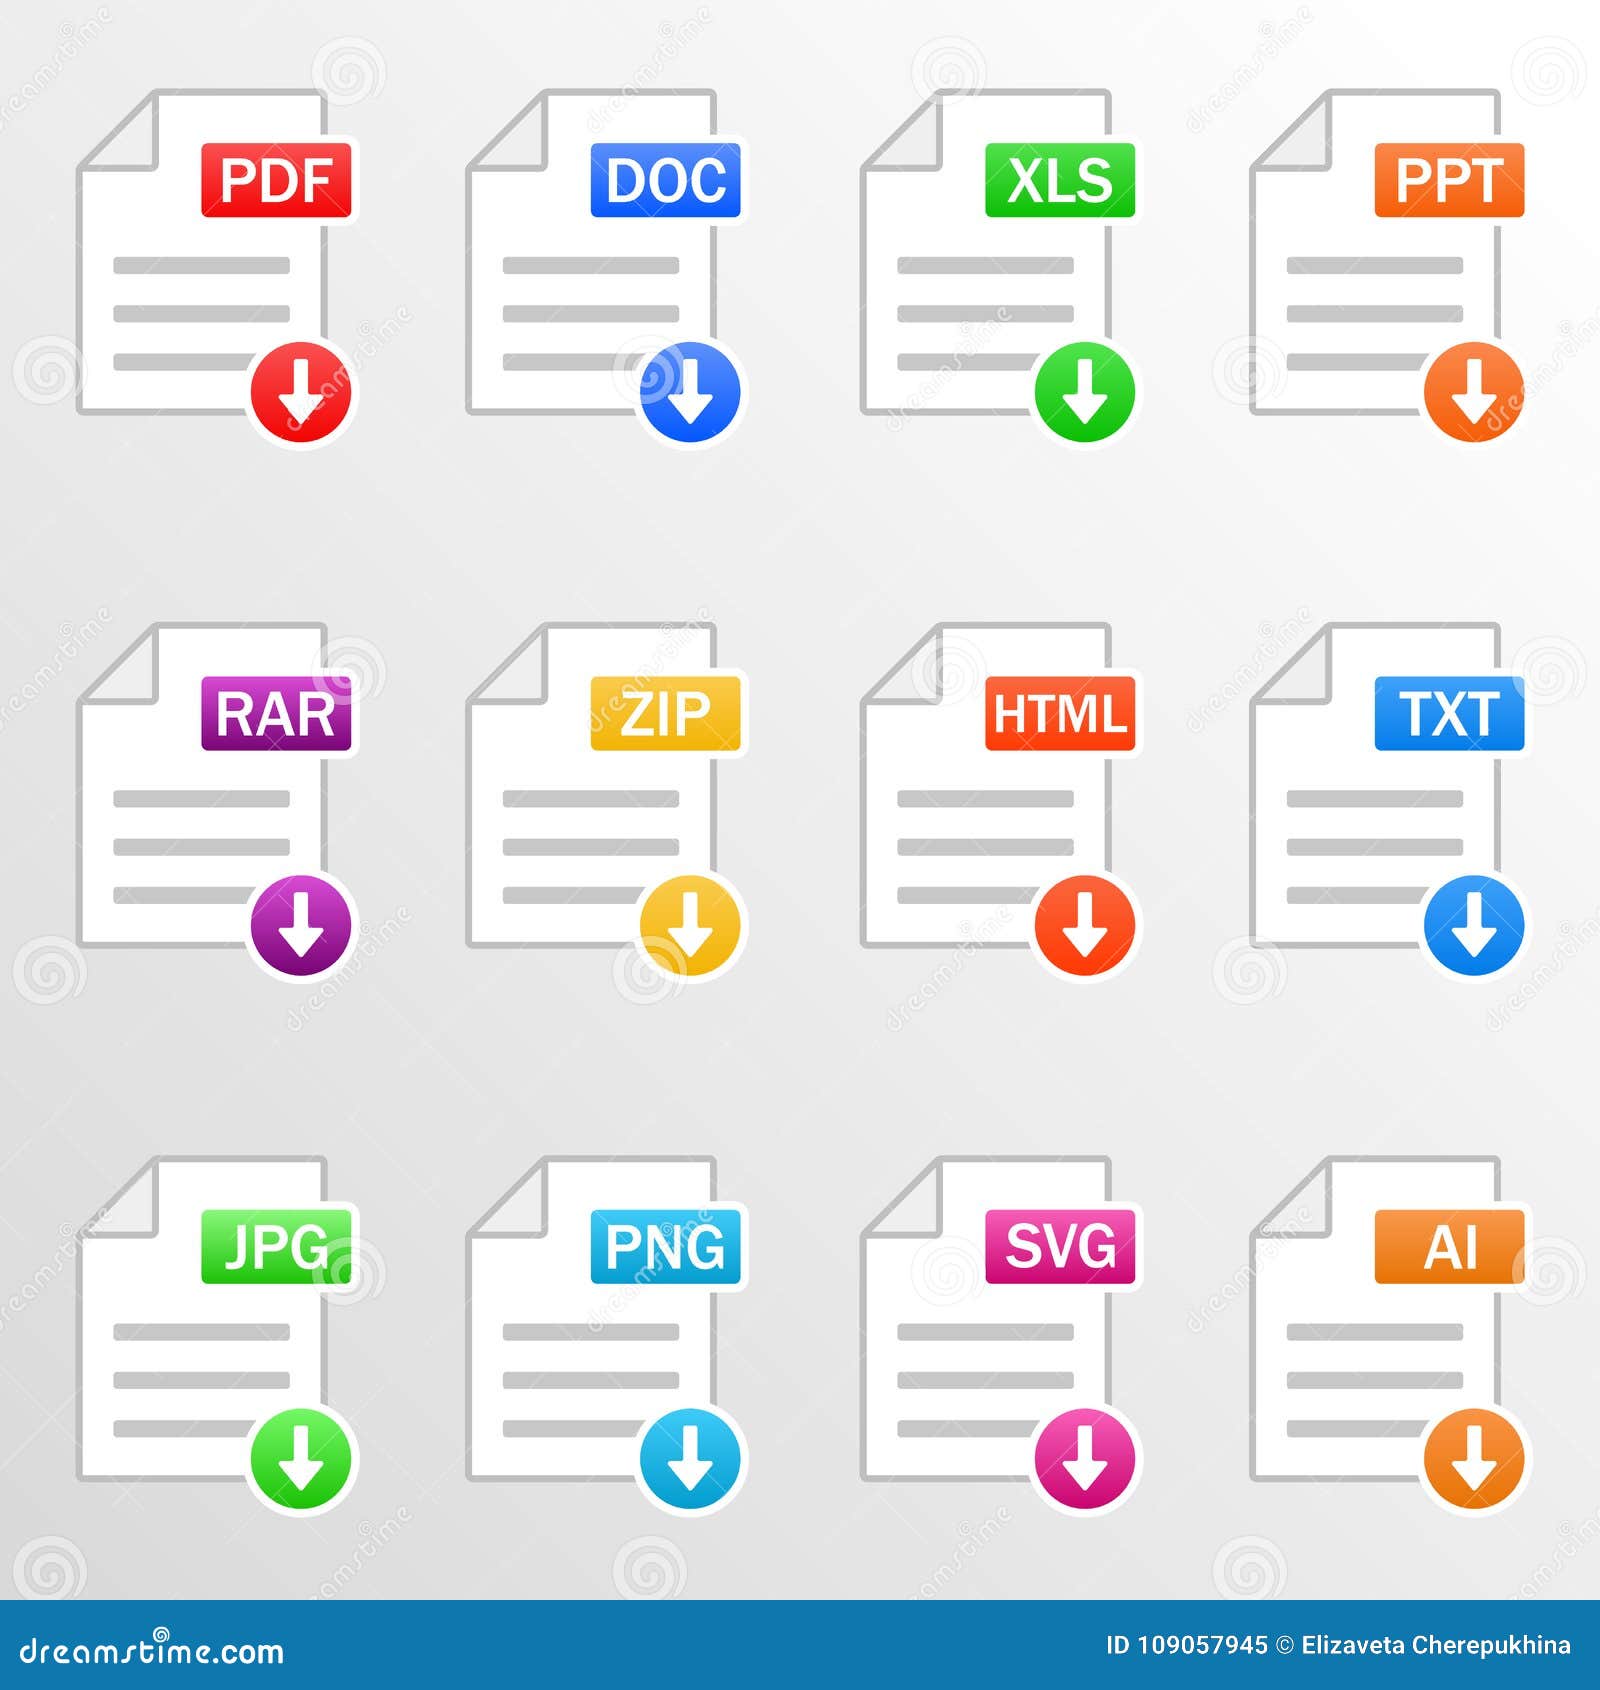 document files. icon set. download file formats - pdf, doc, xls, ppt, rar, zip, html, txt, jpg, png, svg, ai. 